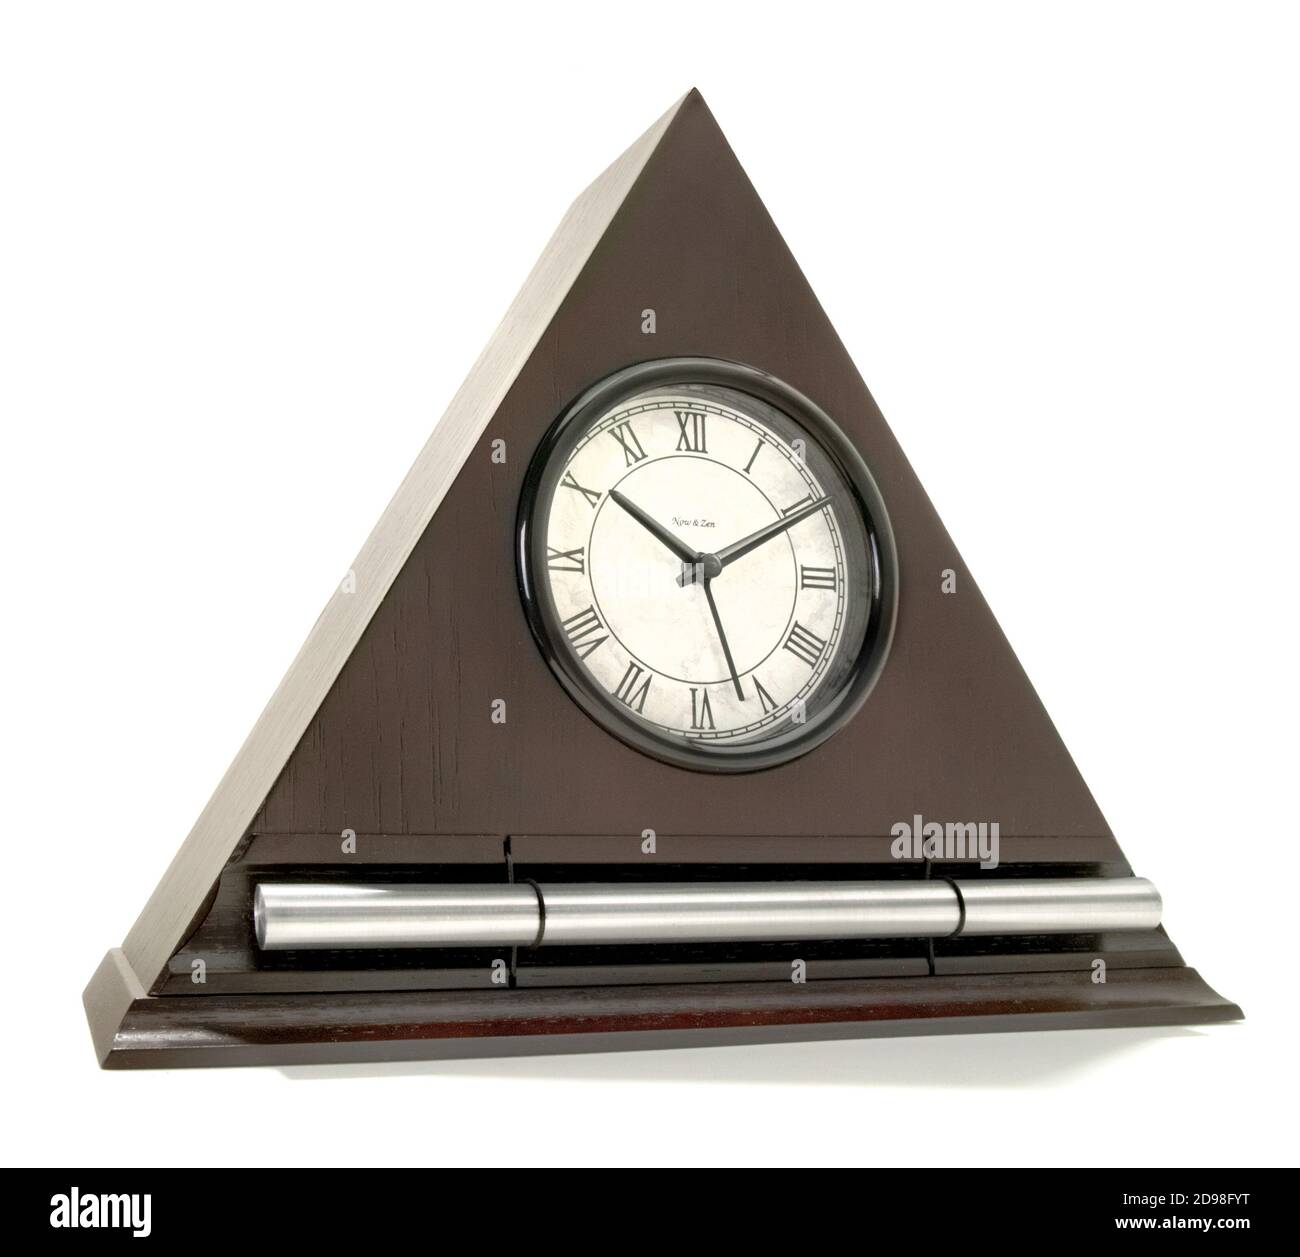 Triangle-shaped analog zen alarm clock photographed on a white background  Stock Photo - Alamy